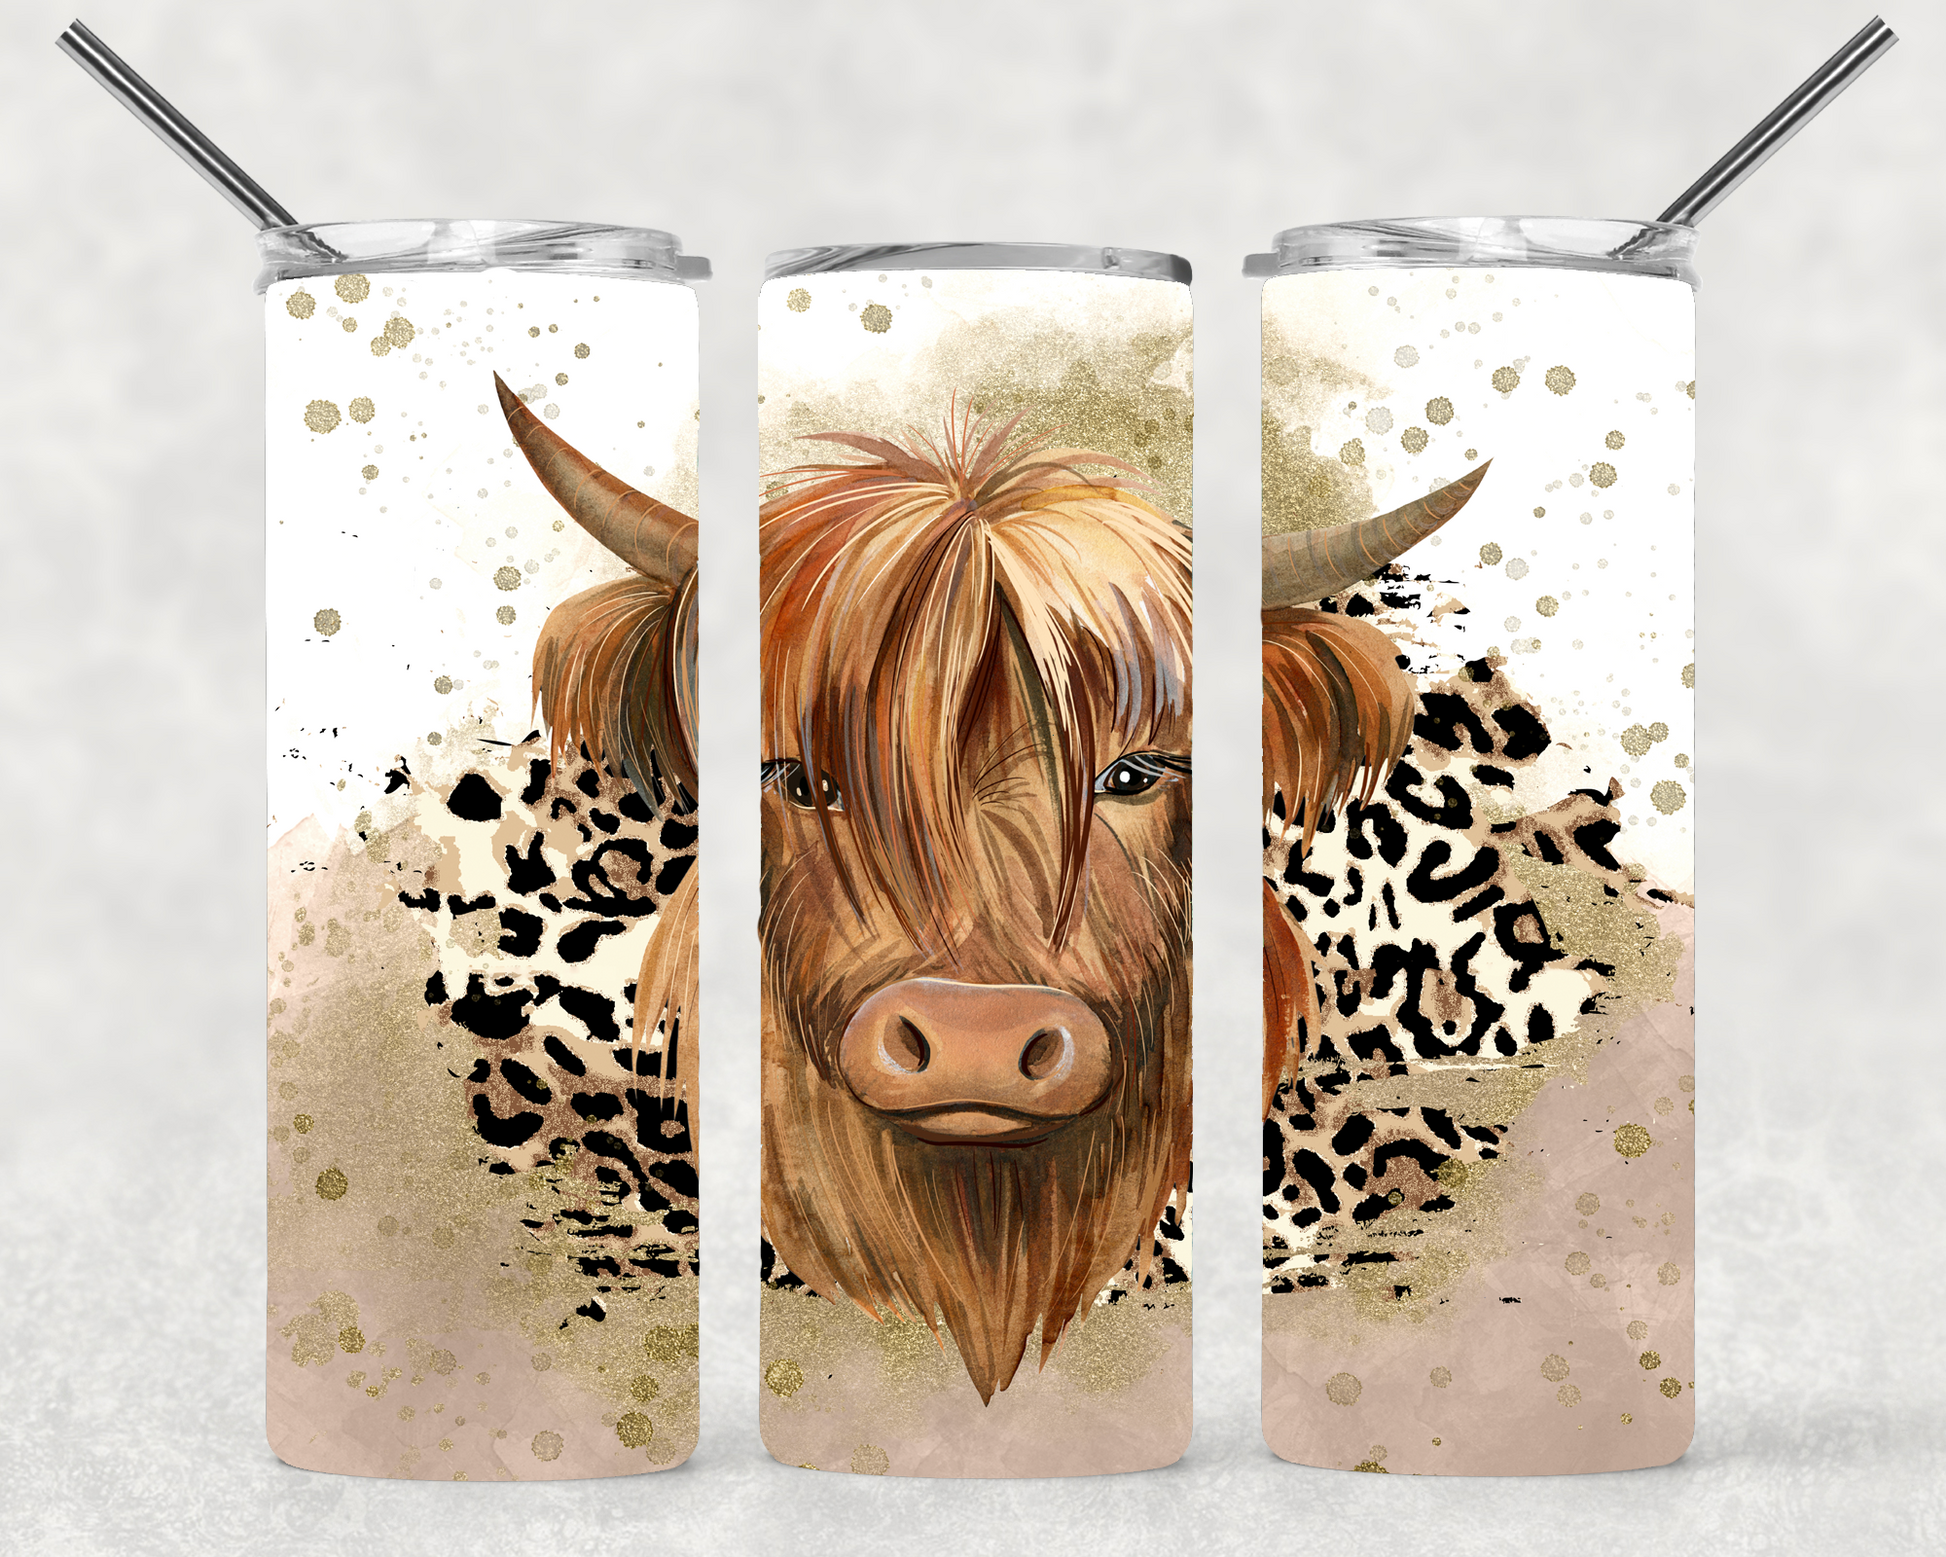 Highland Bull Cow 20 oz Tumber Wrap STRAIGHT - Inspire Uplift